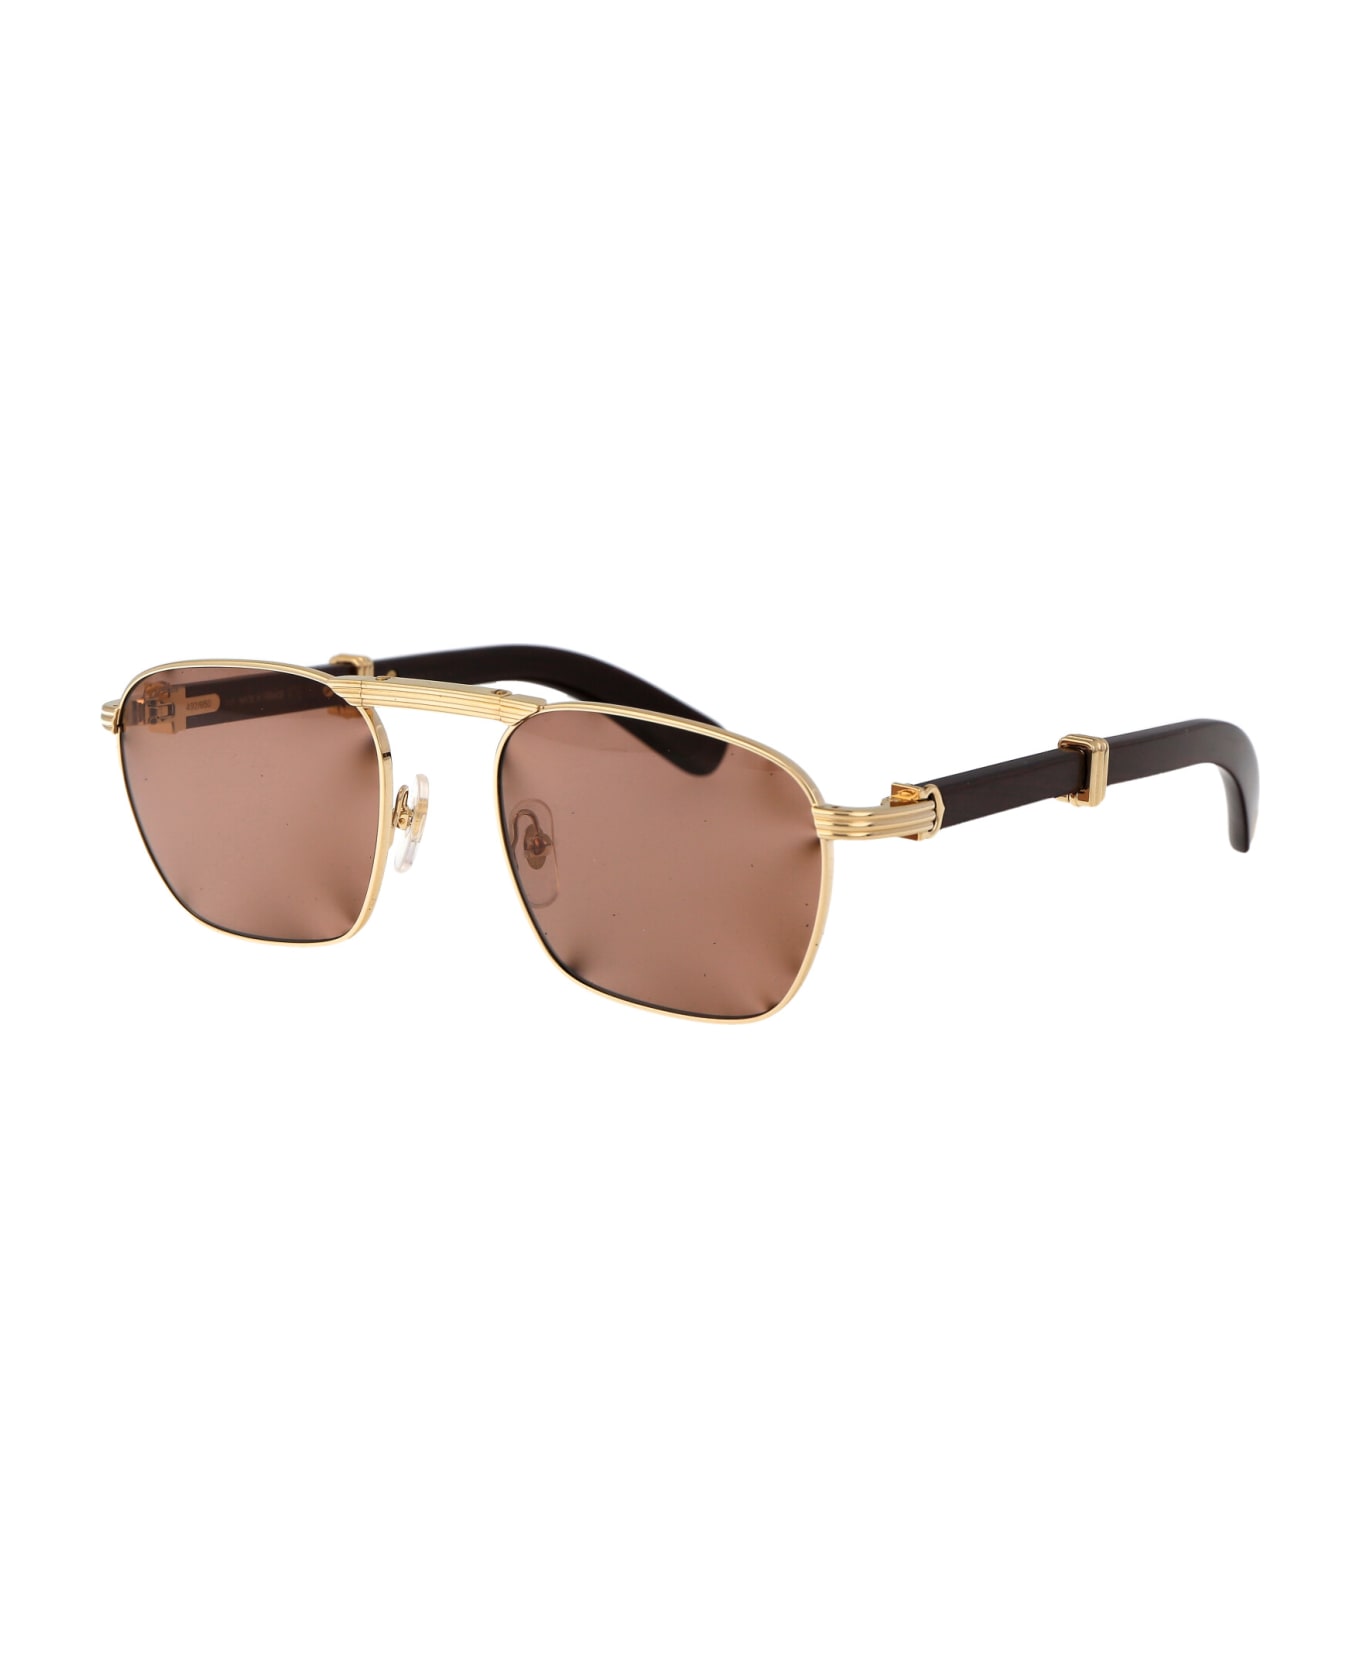 Cartier Eyewear Ct0428s Sunglasses - 001 GOLD BURGUNDY BROWN サングラス